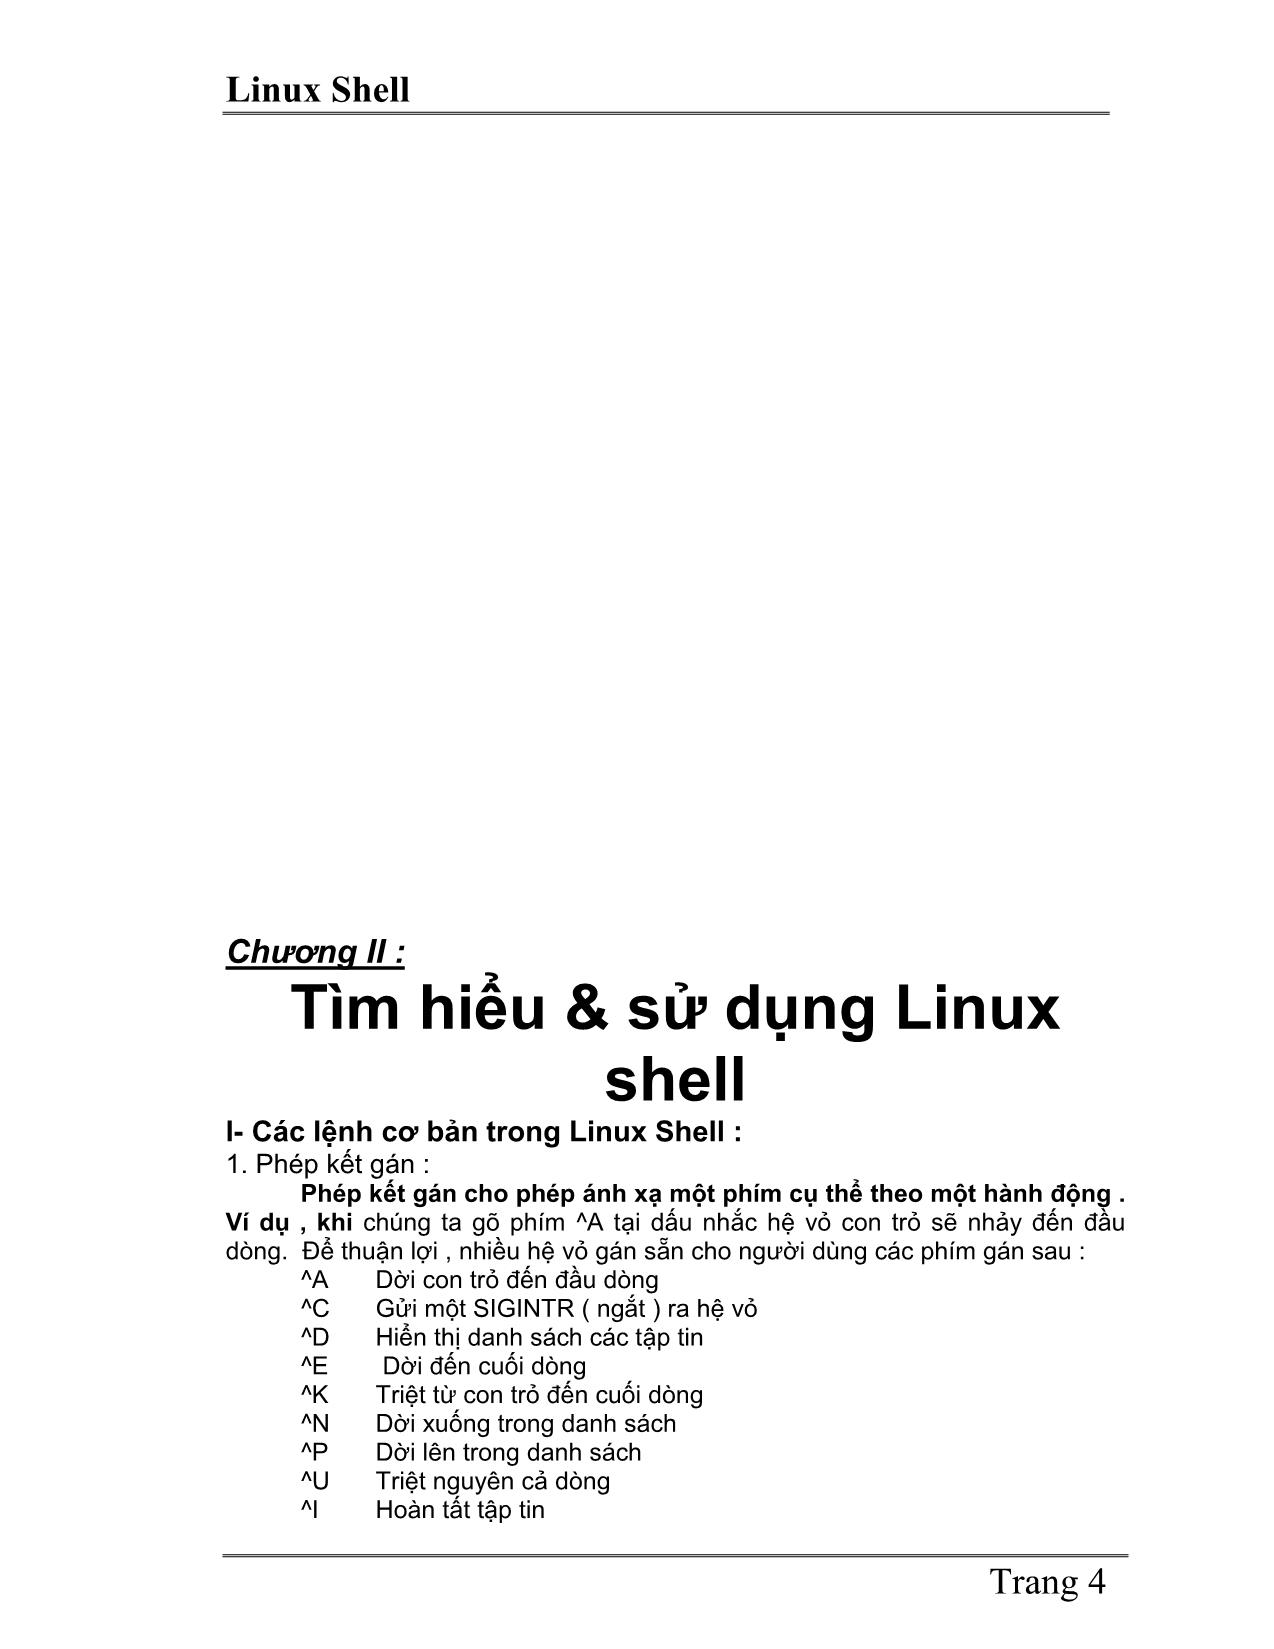 Linux Shell trang 5